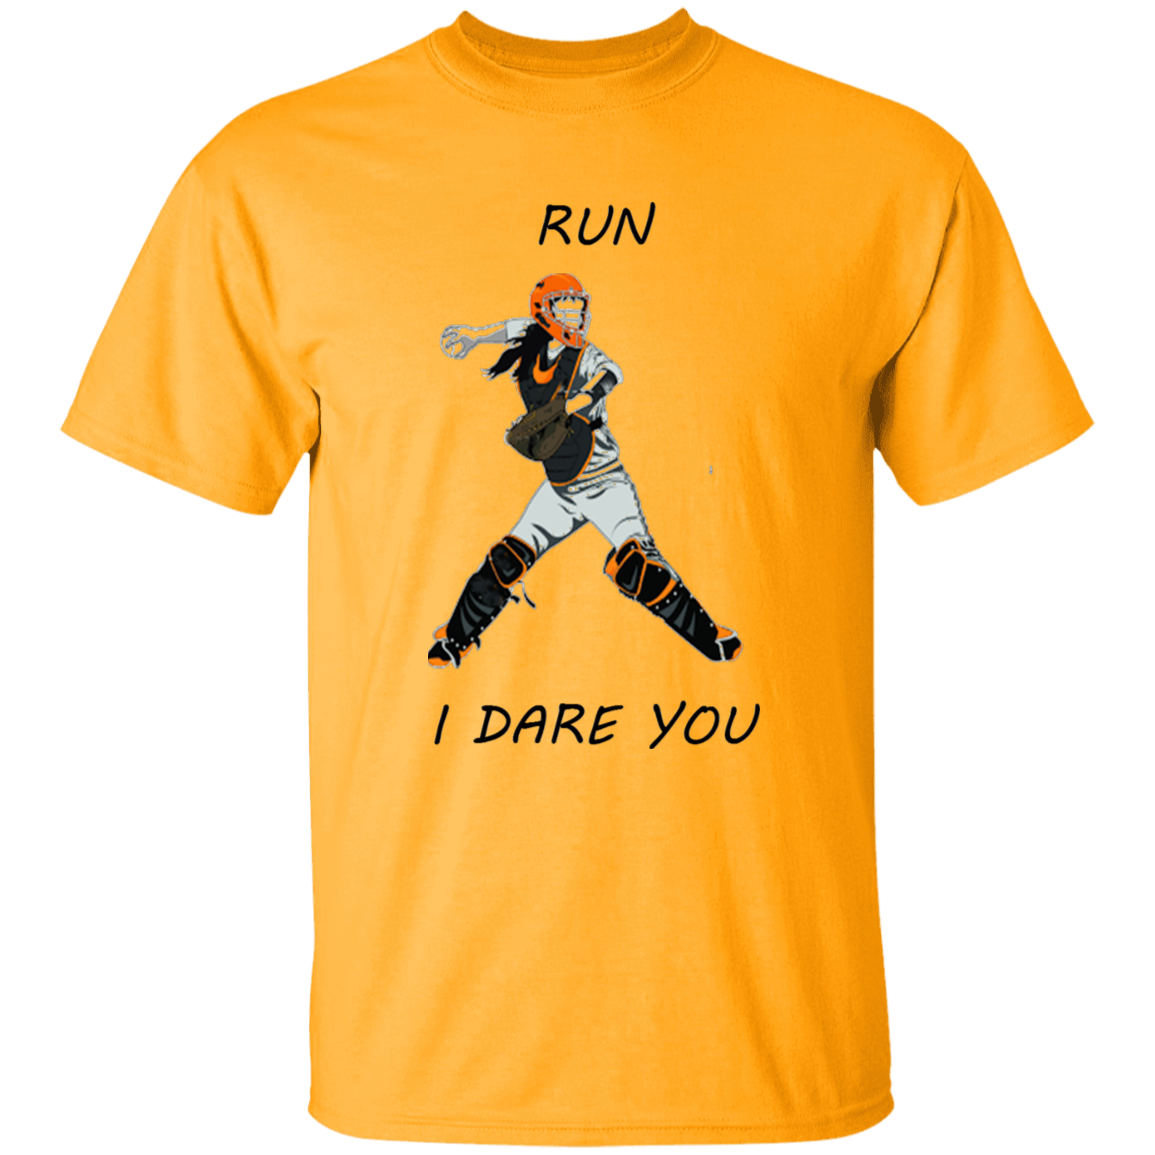 Softball catcher - run - T-Shirt (youth)